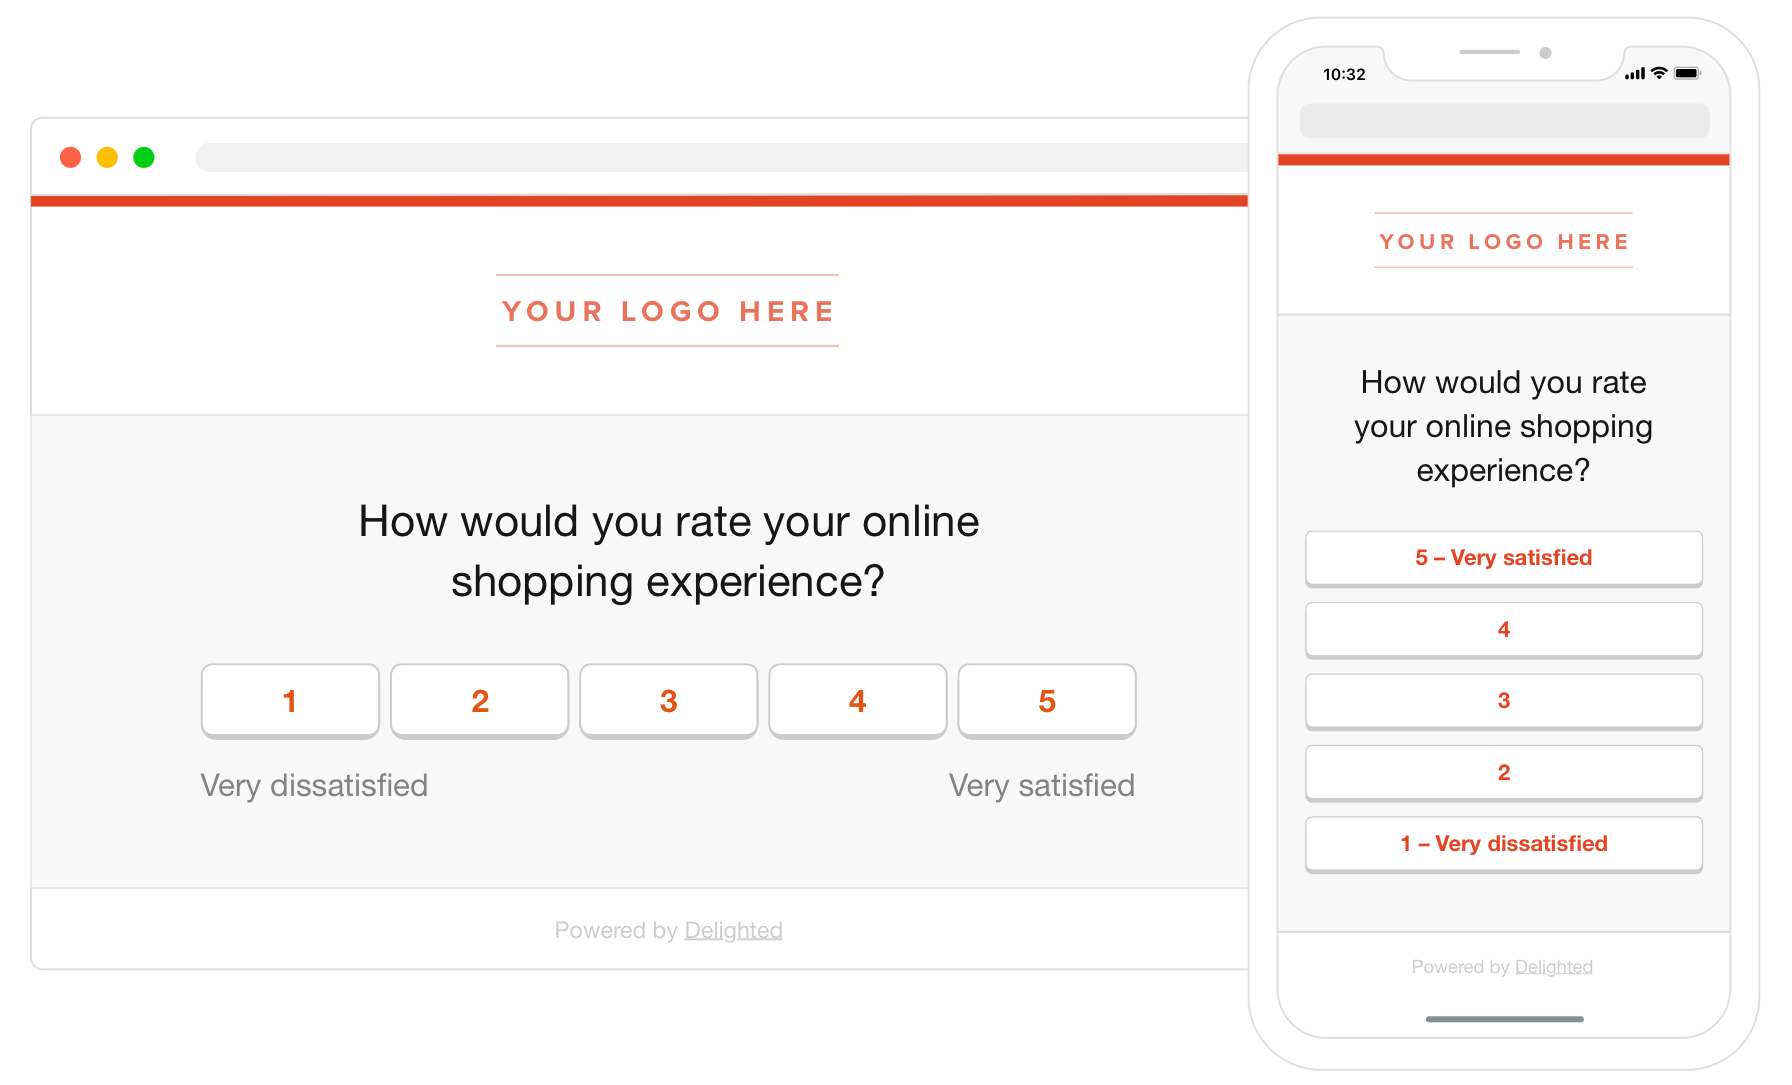 Survey Creator: Create Online Surveys for Free with SurveyHero